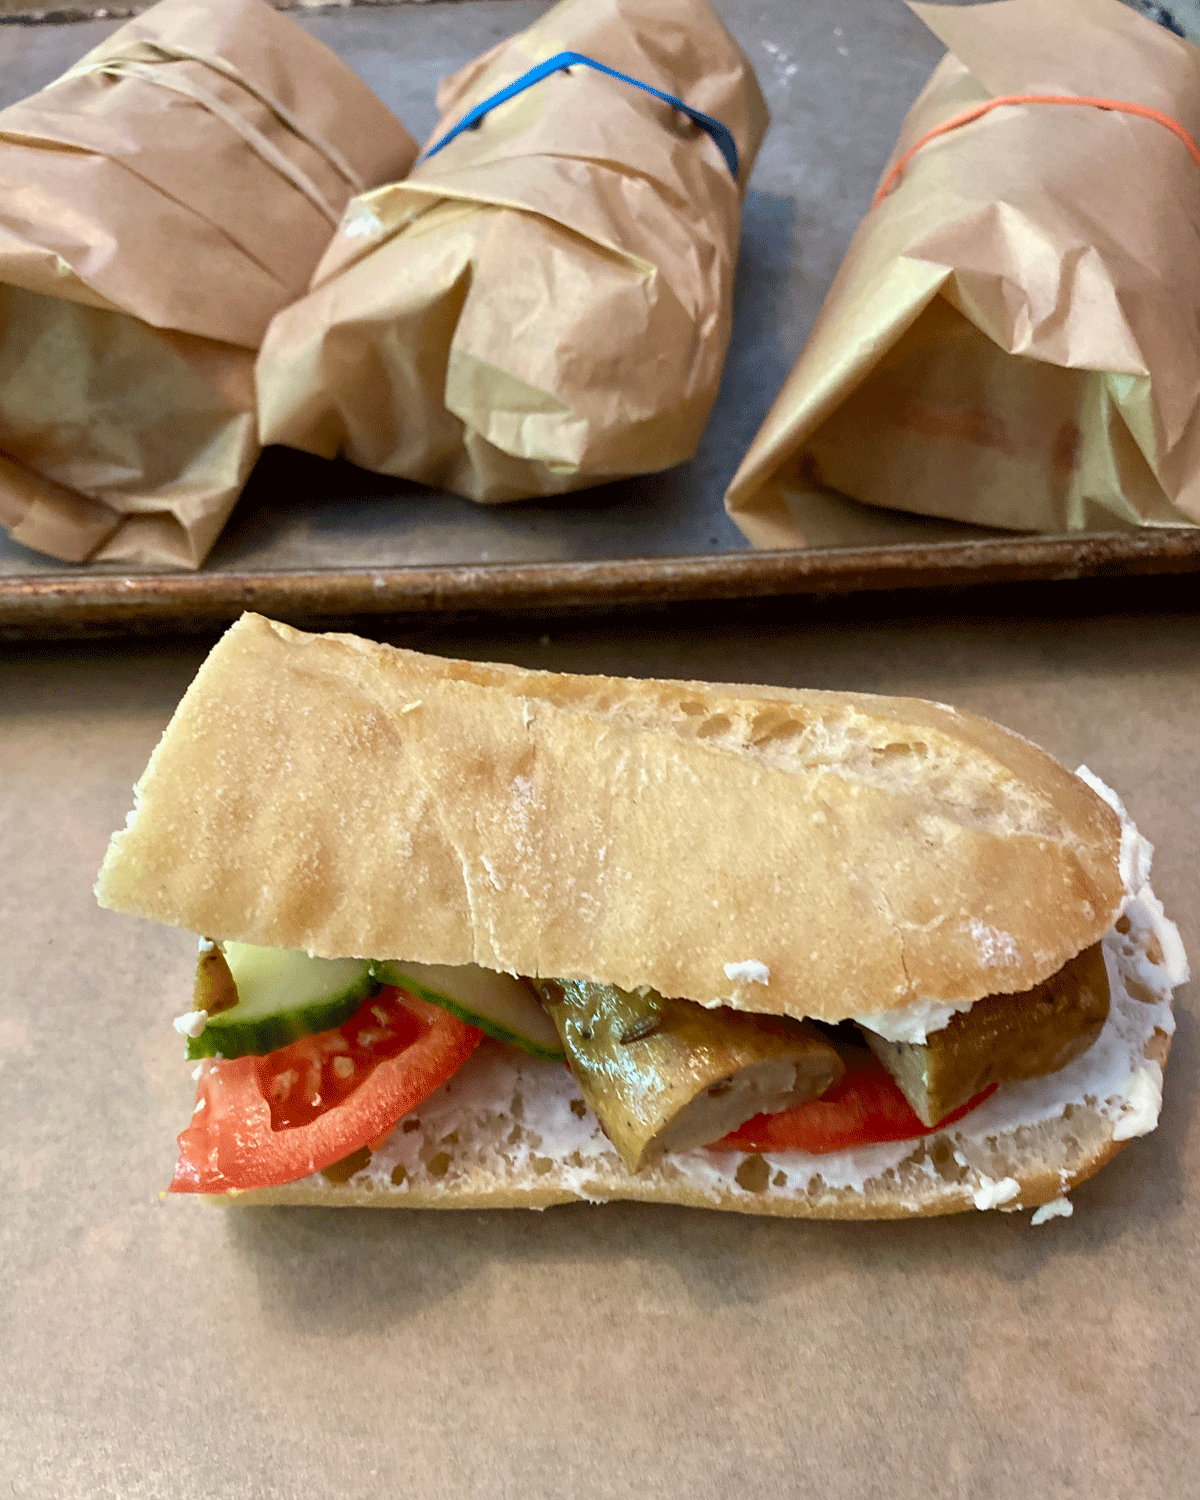 Ukrainian sandwich with sausage, tomato and cucumber